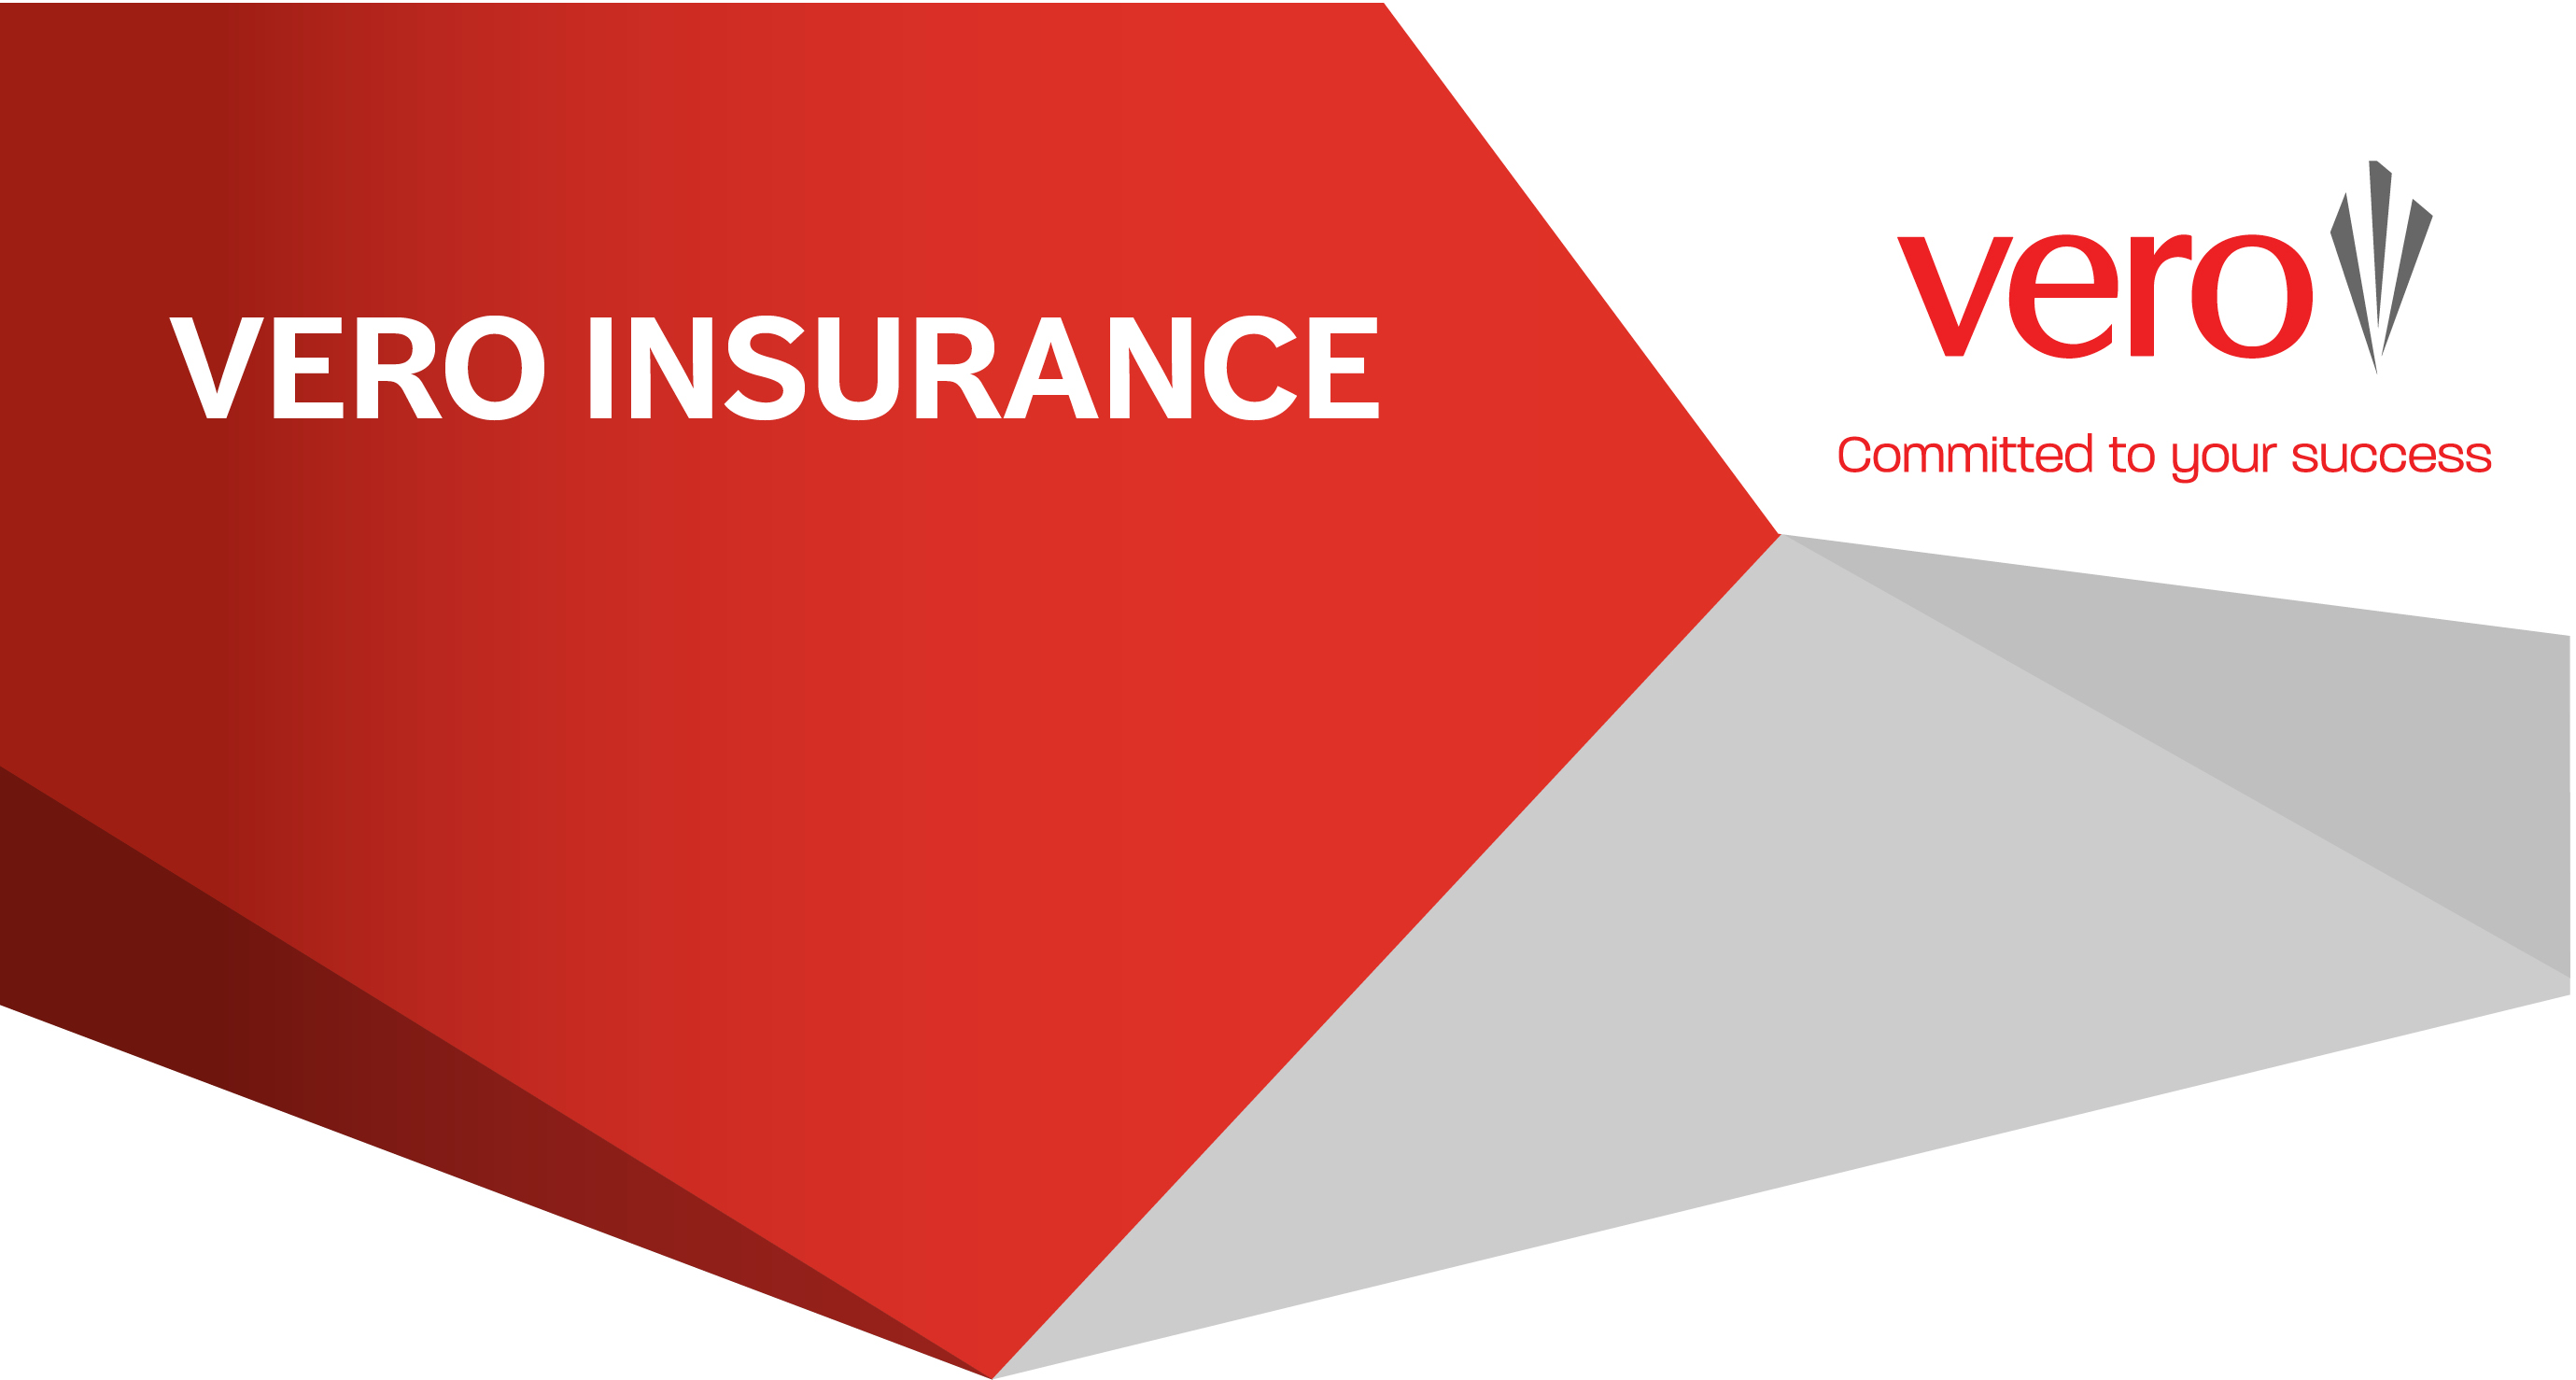 Vero Insurance